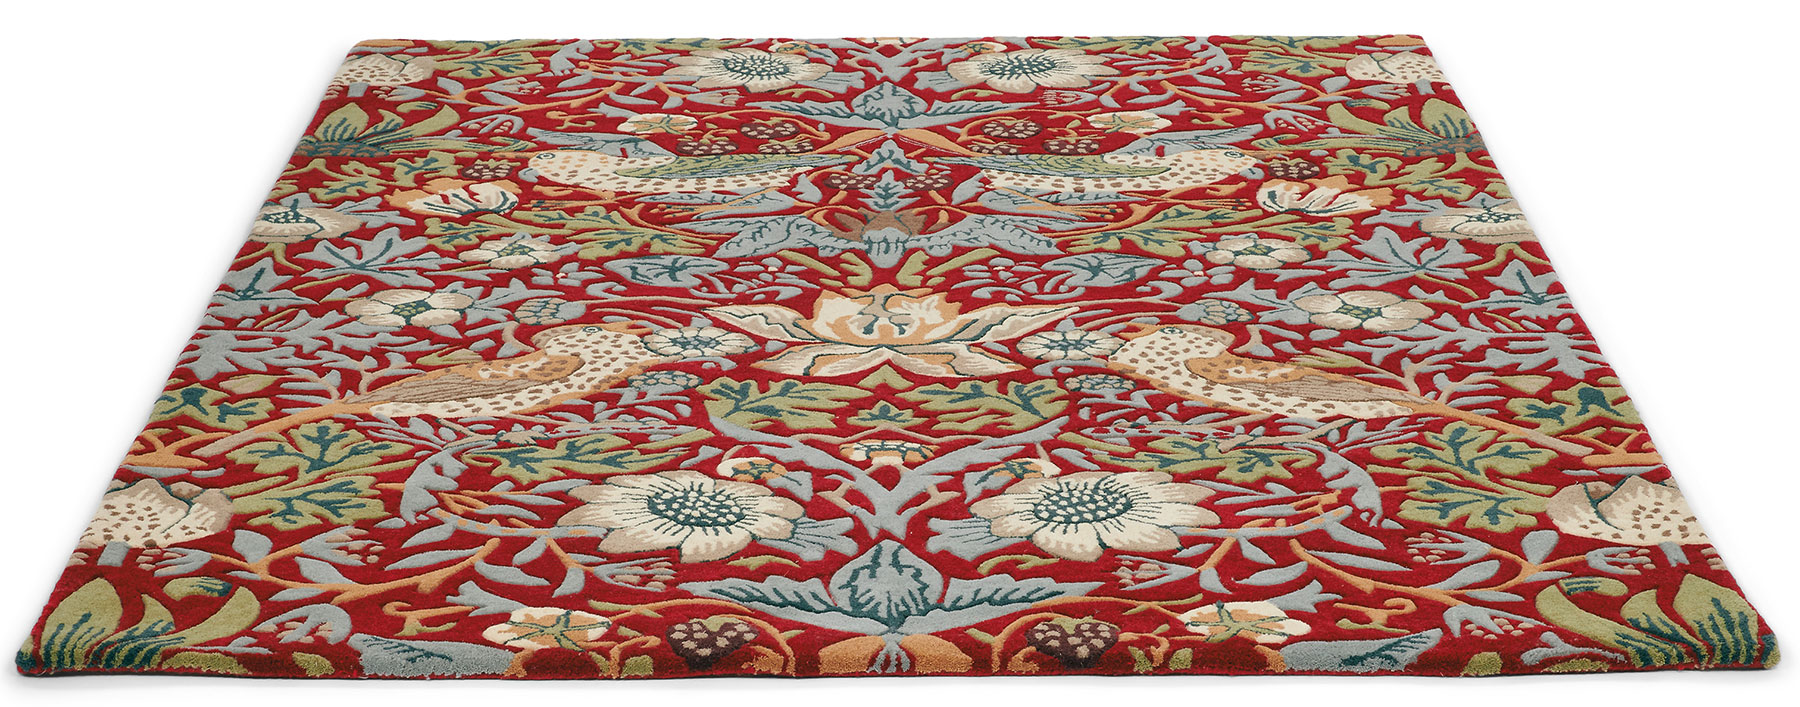 Carpet "Strawberry Thief Red" (170 x 240 cm) - after William Morris